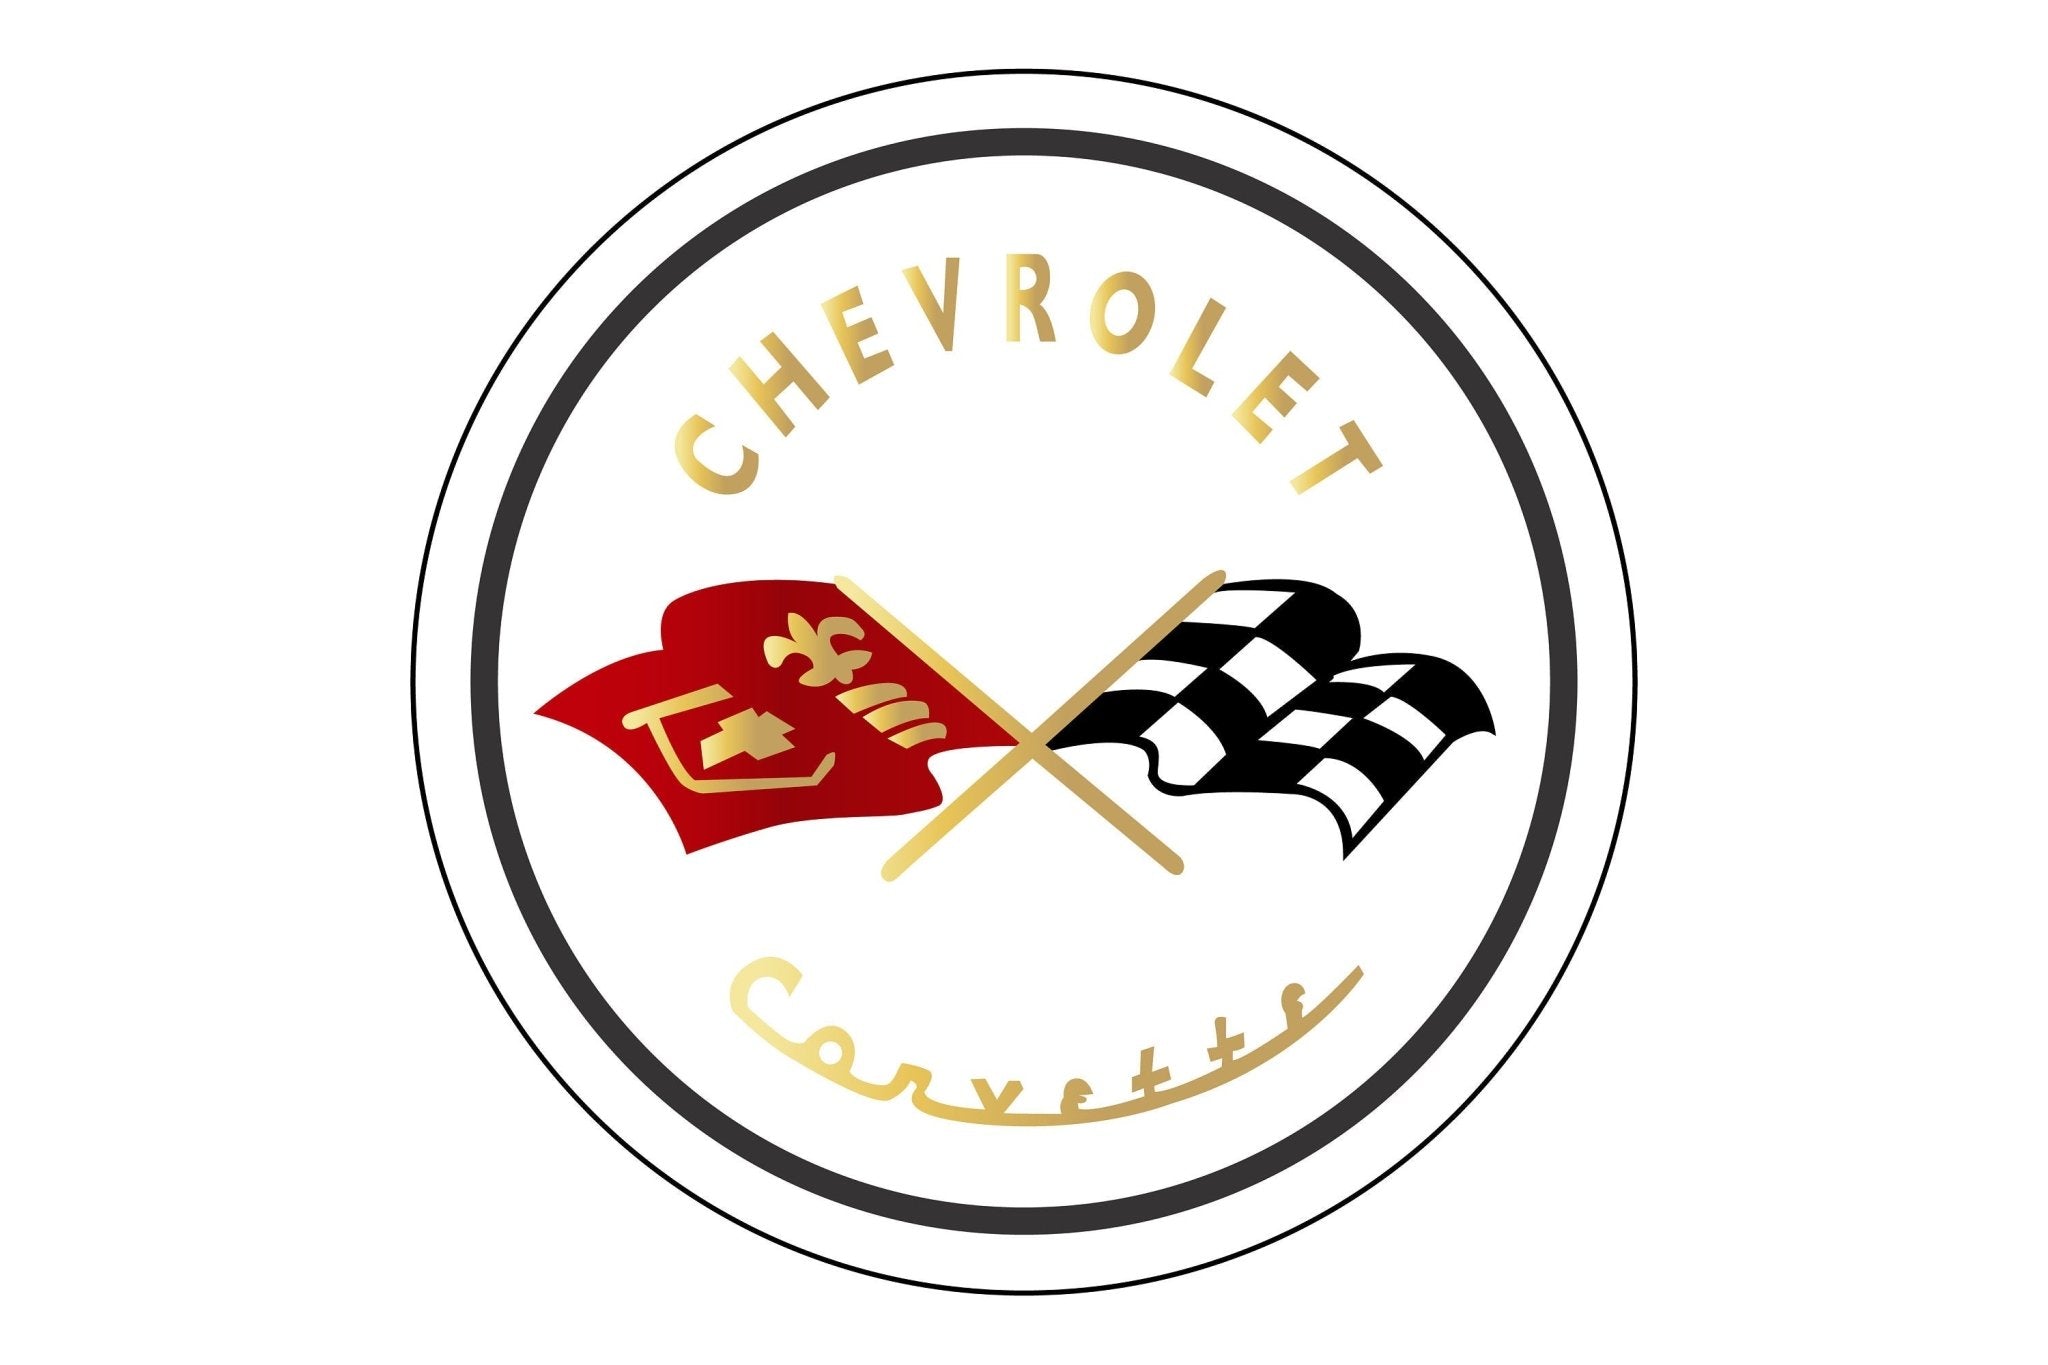 Corvette C1 Logo Instant Download, Vector, Car, Emblem, SVG, Cut File, Print, Illustration, Digital, Scrapbooking, Cameo, Cricut - Vette1 - C1 Downloads